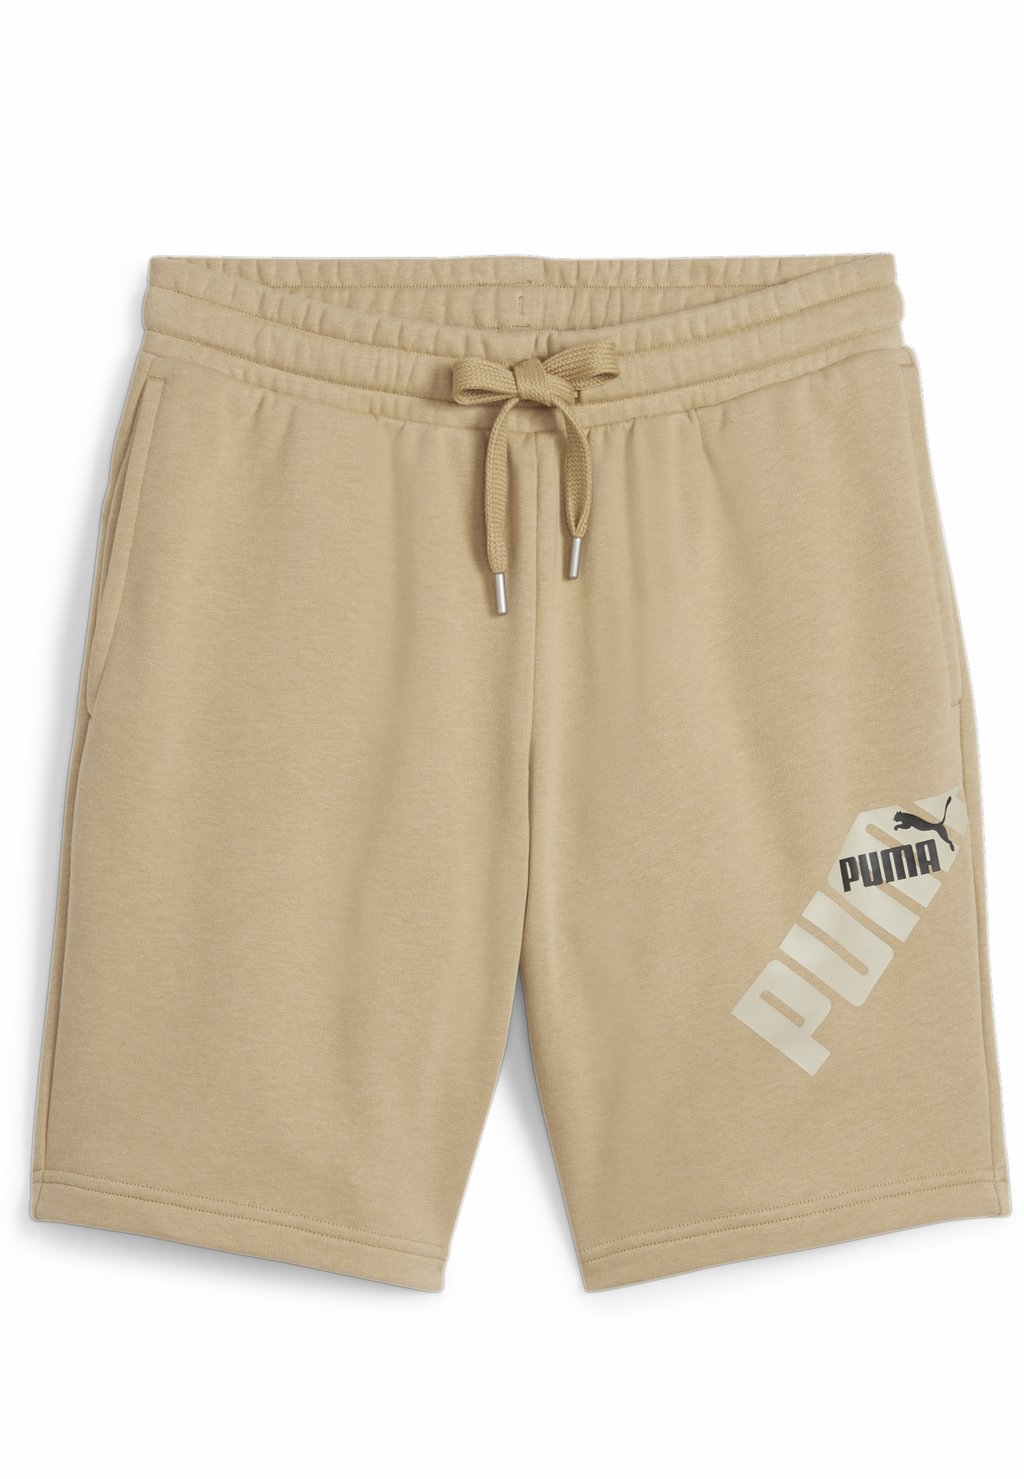 Спортивные шорты Power Graphic Puma, цвет prairie tan